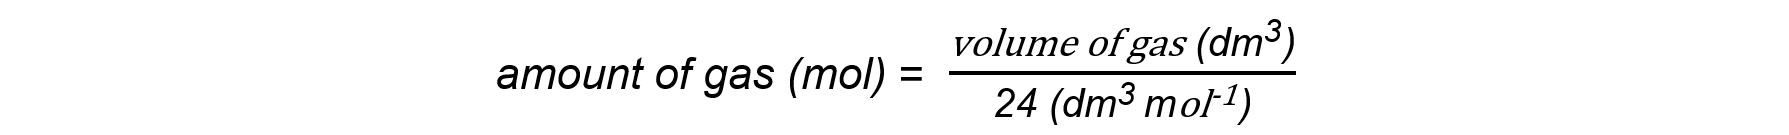 AQA-1.3.3-Amount-of-gas-formula